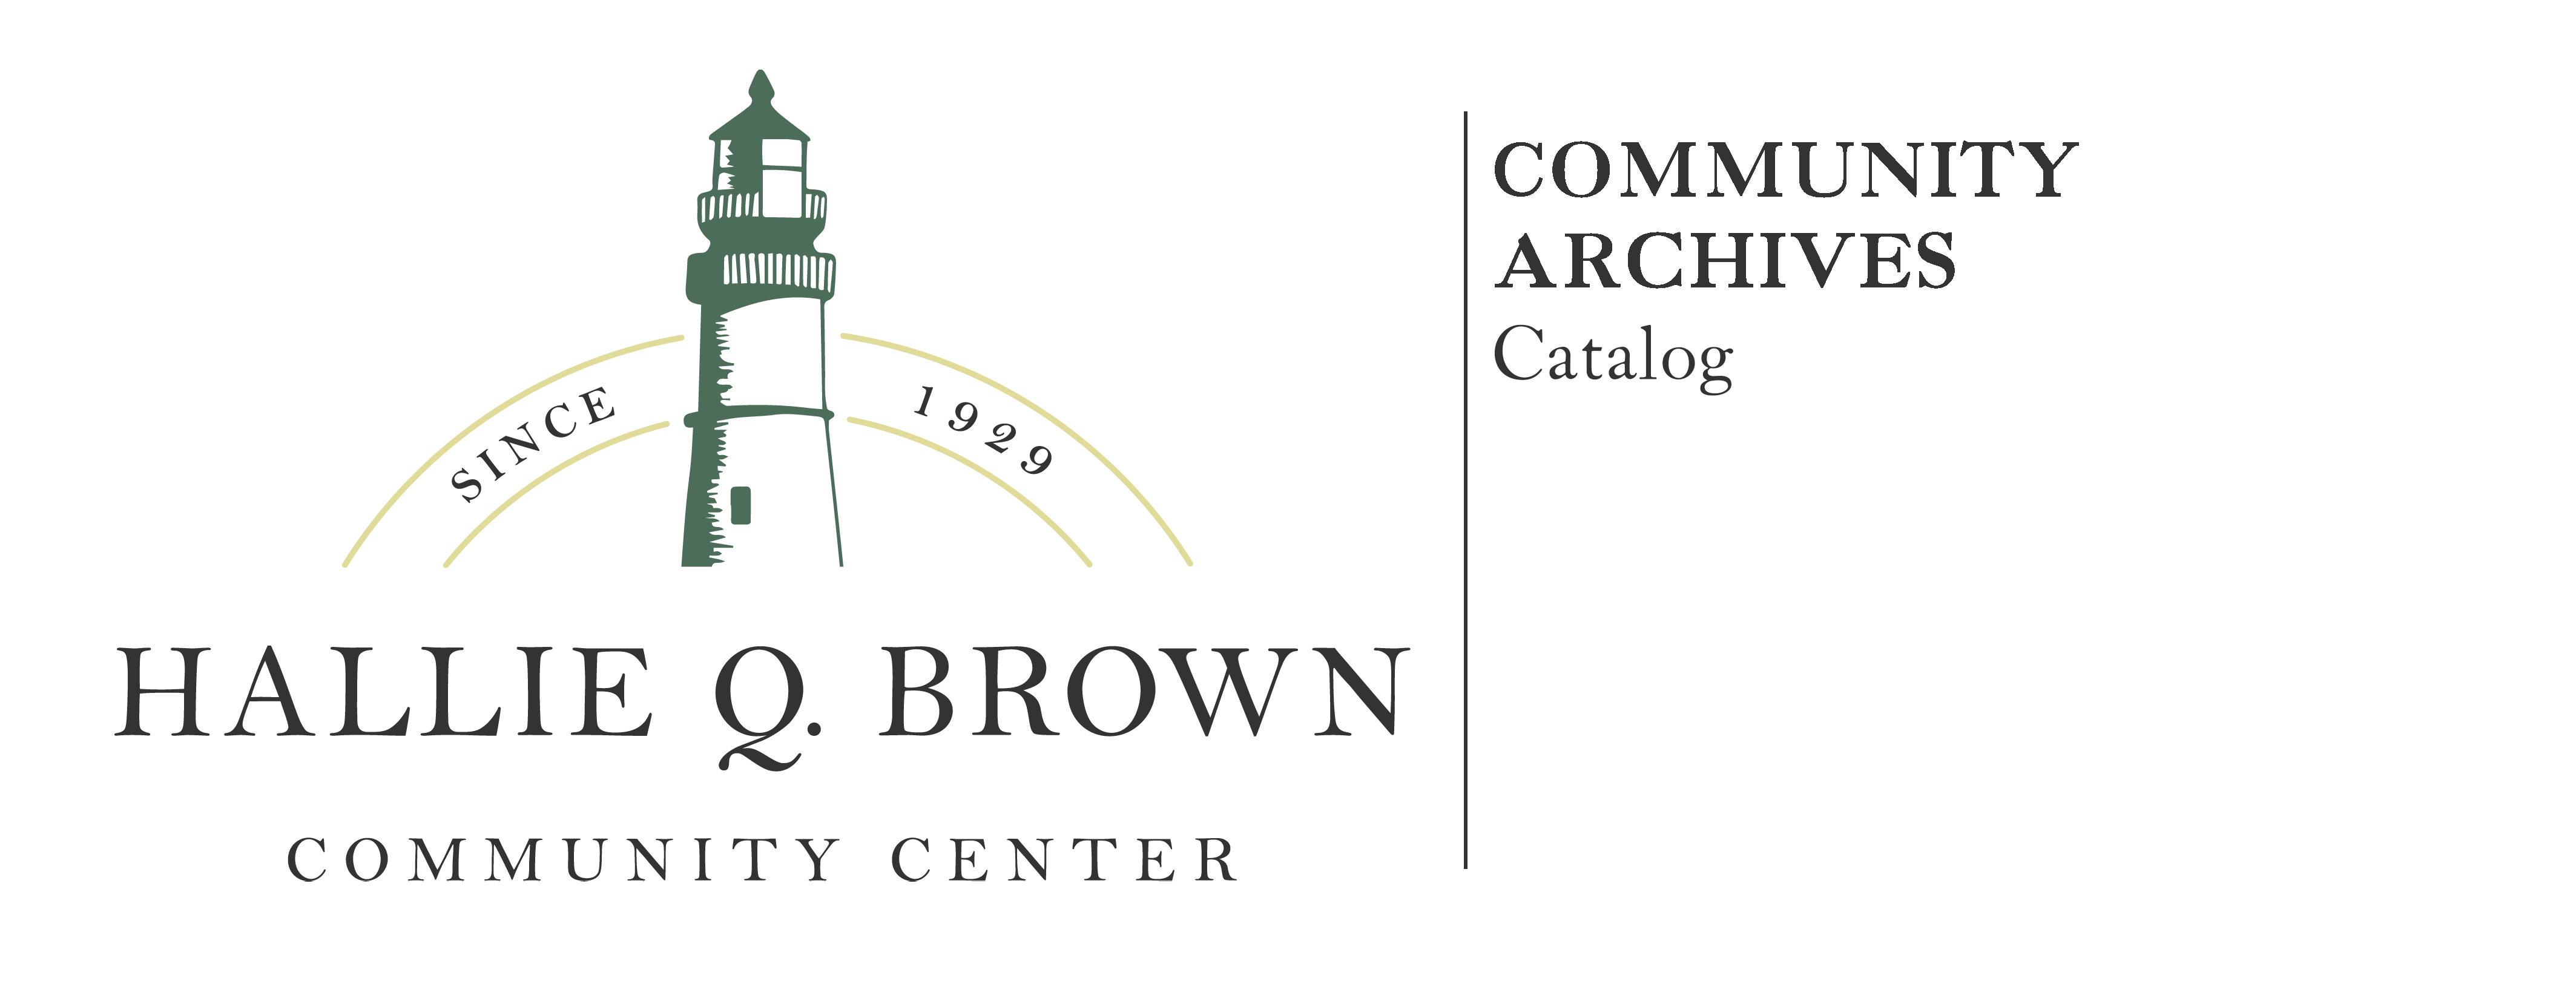 Hallie Q. Brown Community Archives